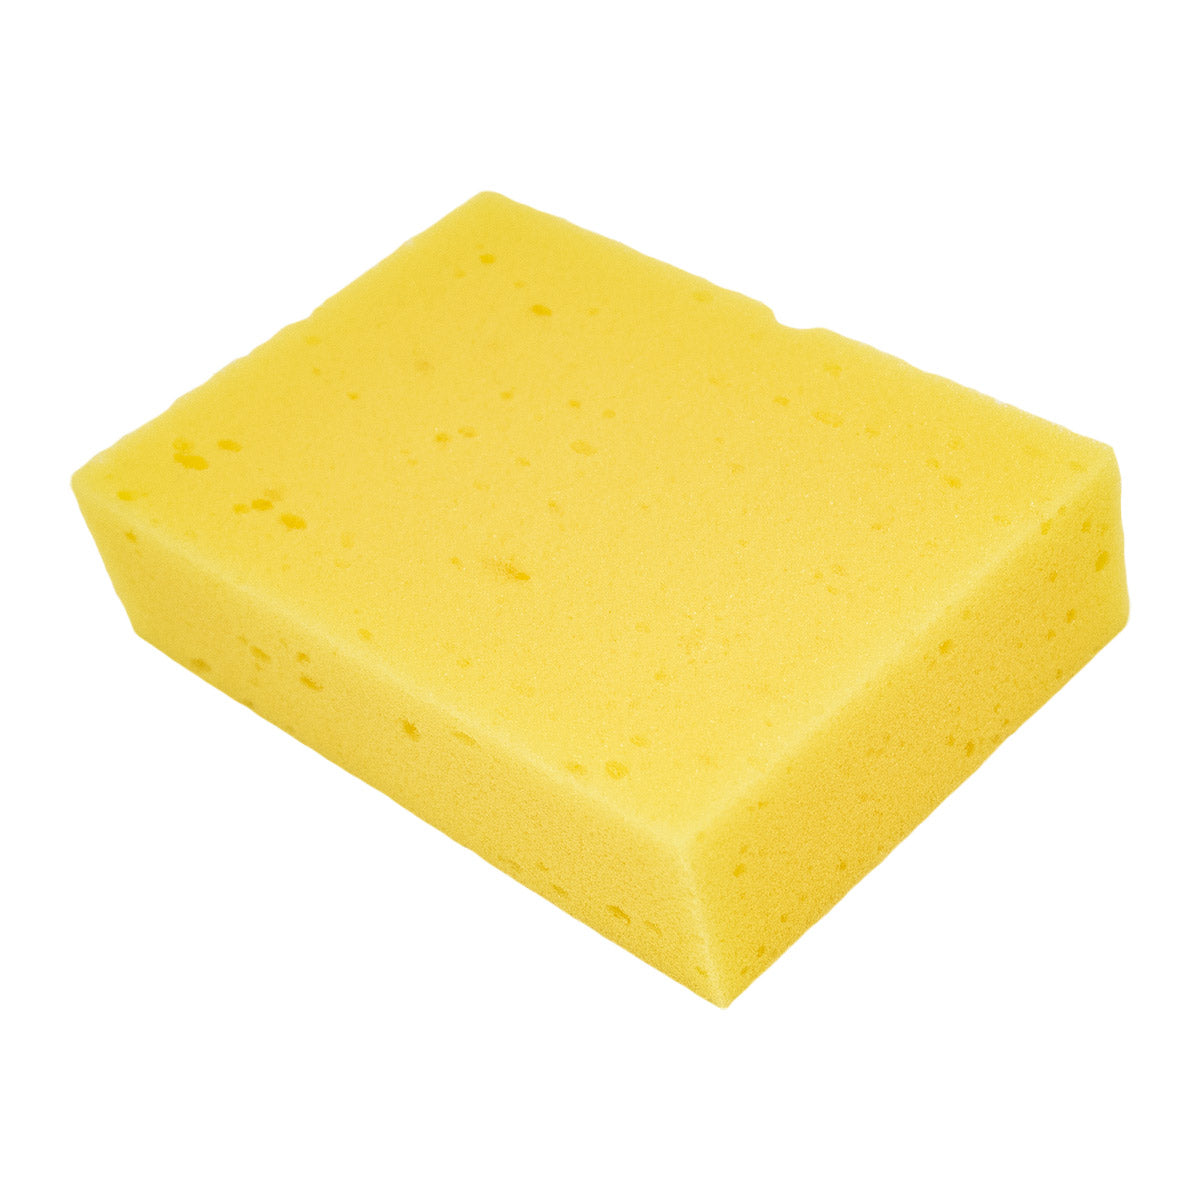 large sponge